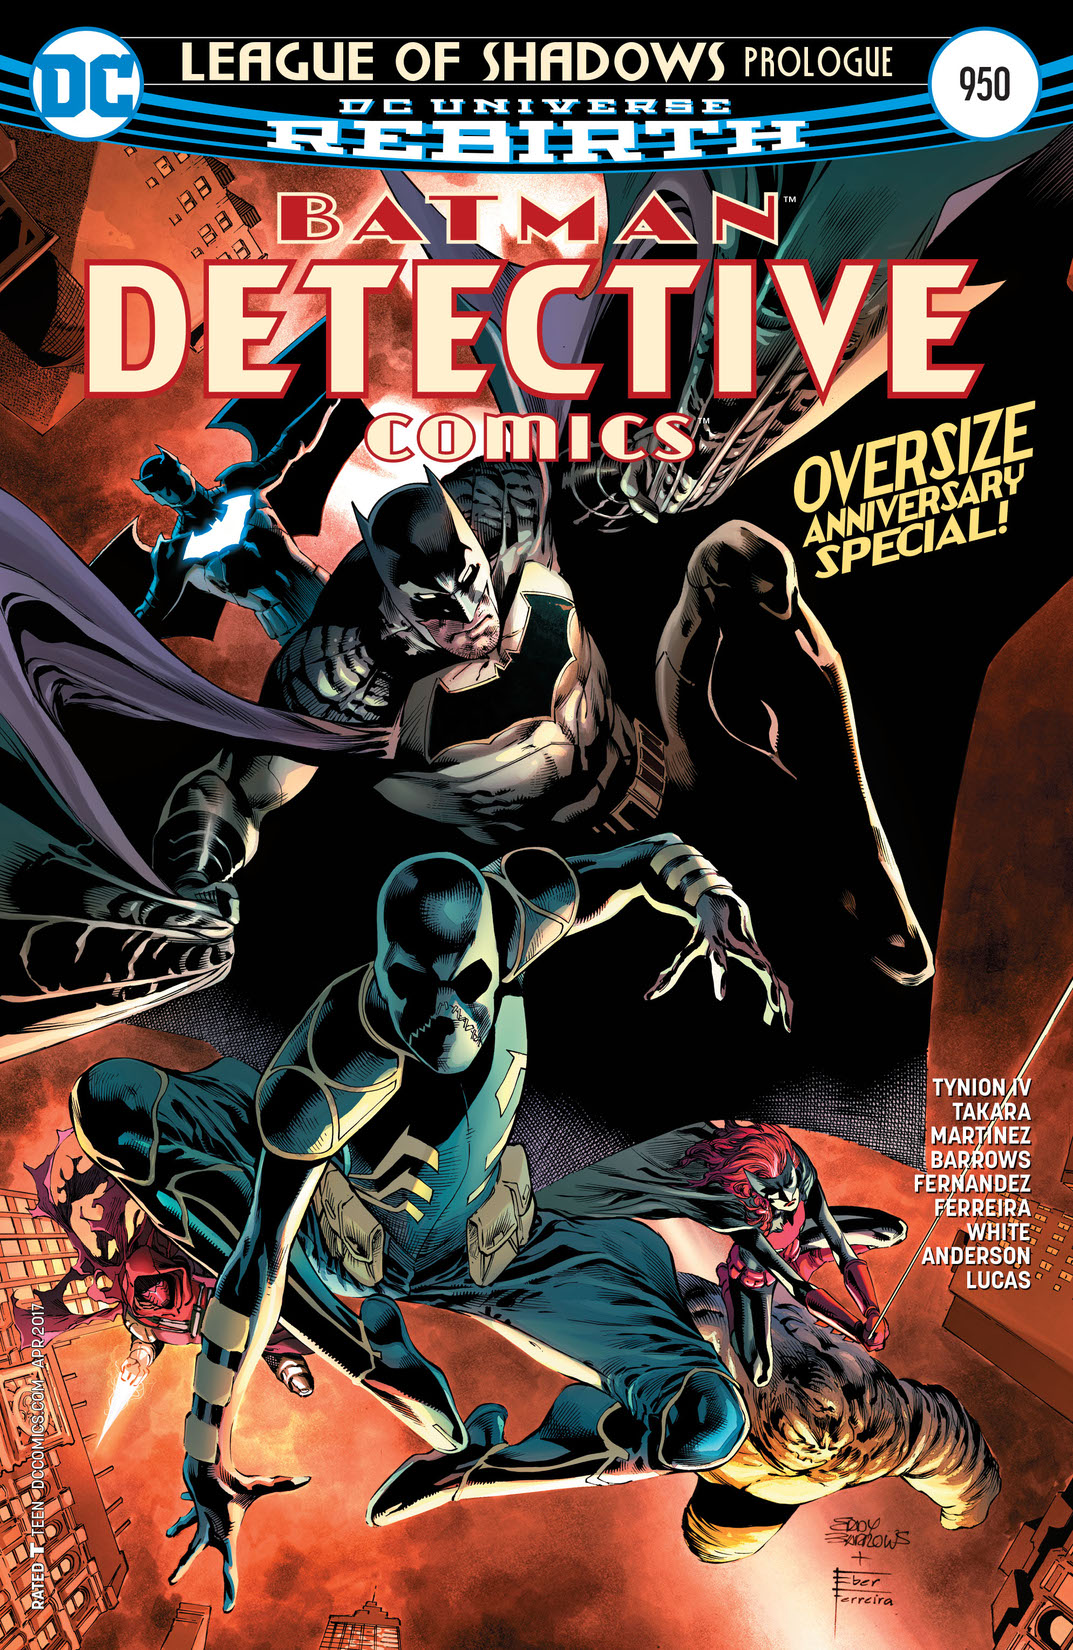 Detective Comics (2016-) #950 preview images